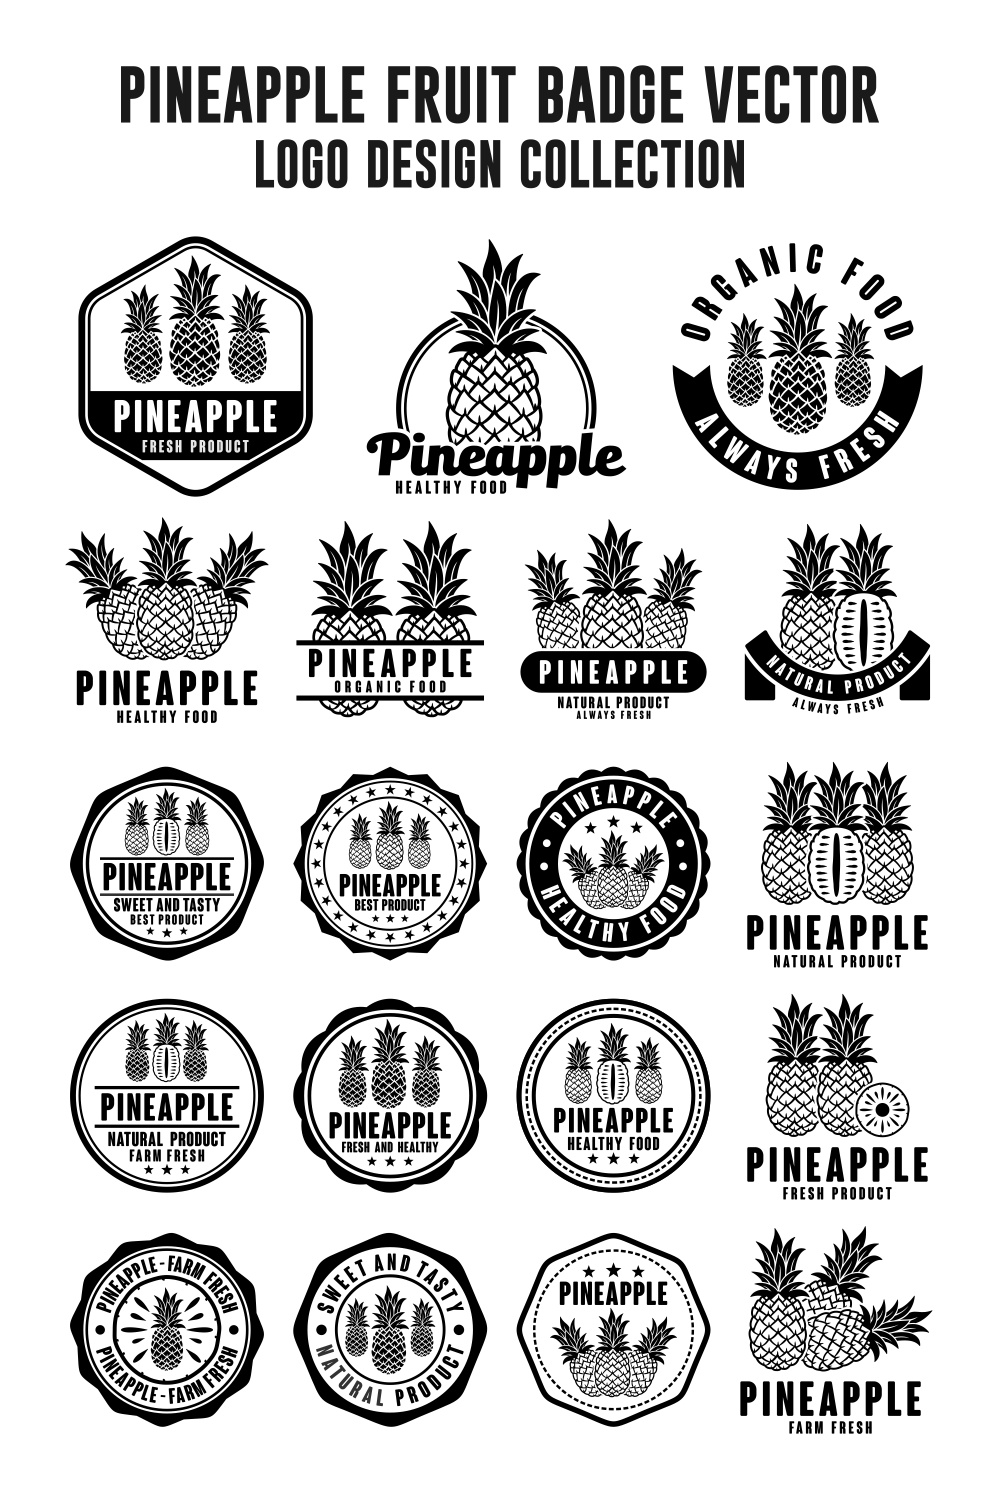 19 Set Pineapple vector logo design collection - $8 pinterest preview image.